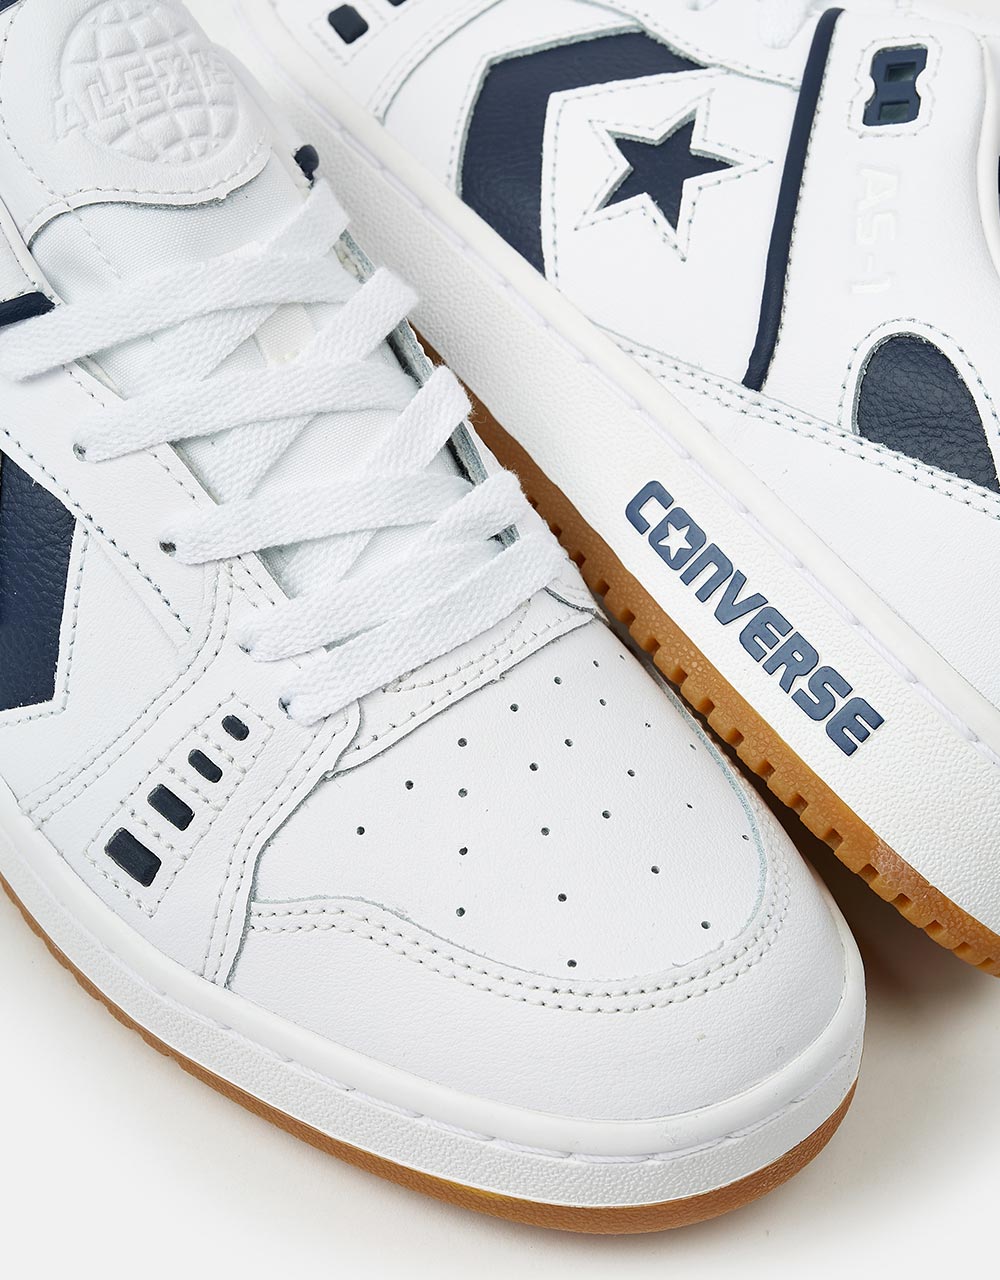 Converse AS-1 Skate Shoes - White/Navy/Gum